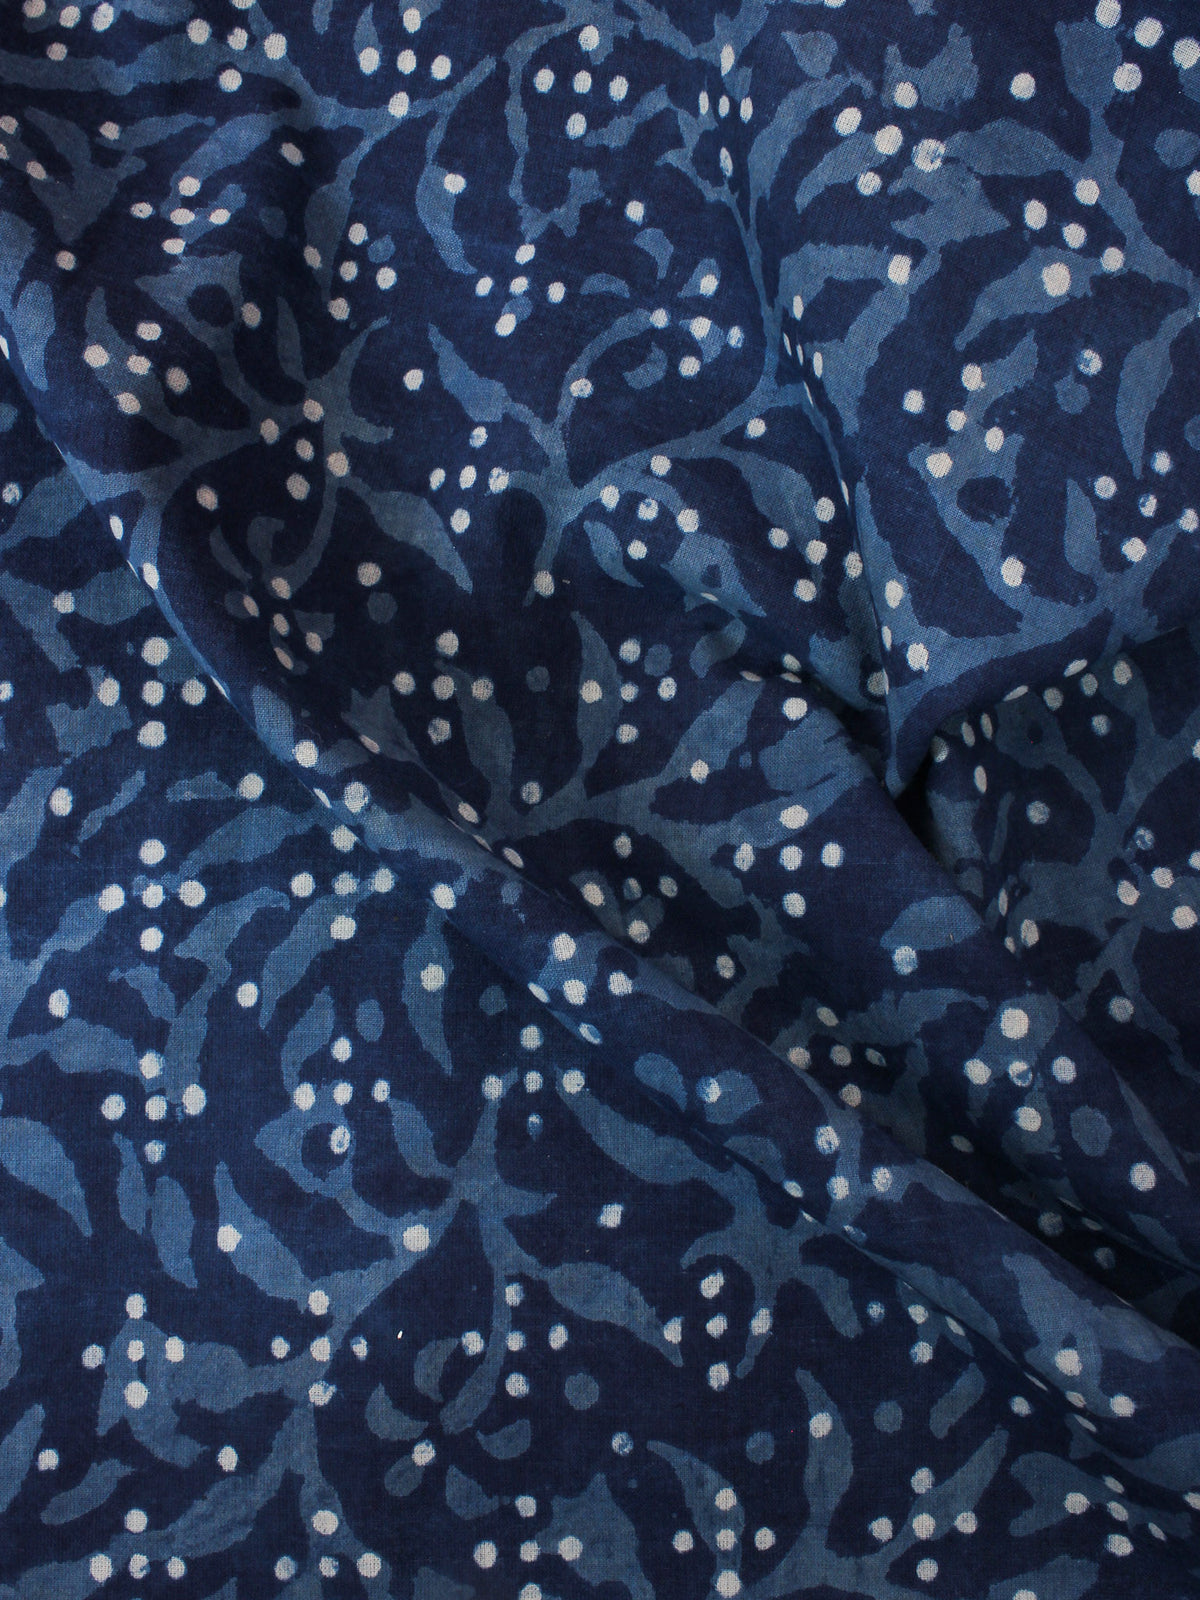 Indigo Blue White Hand Block Printed Cotton Fabric Per Meter - F0916359